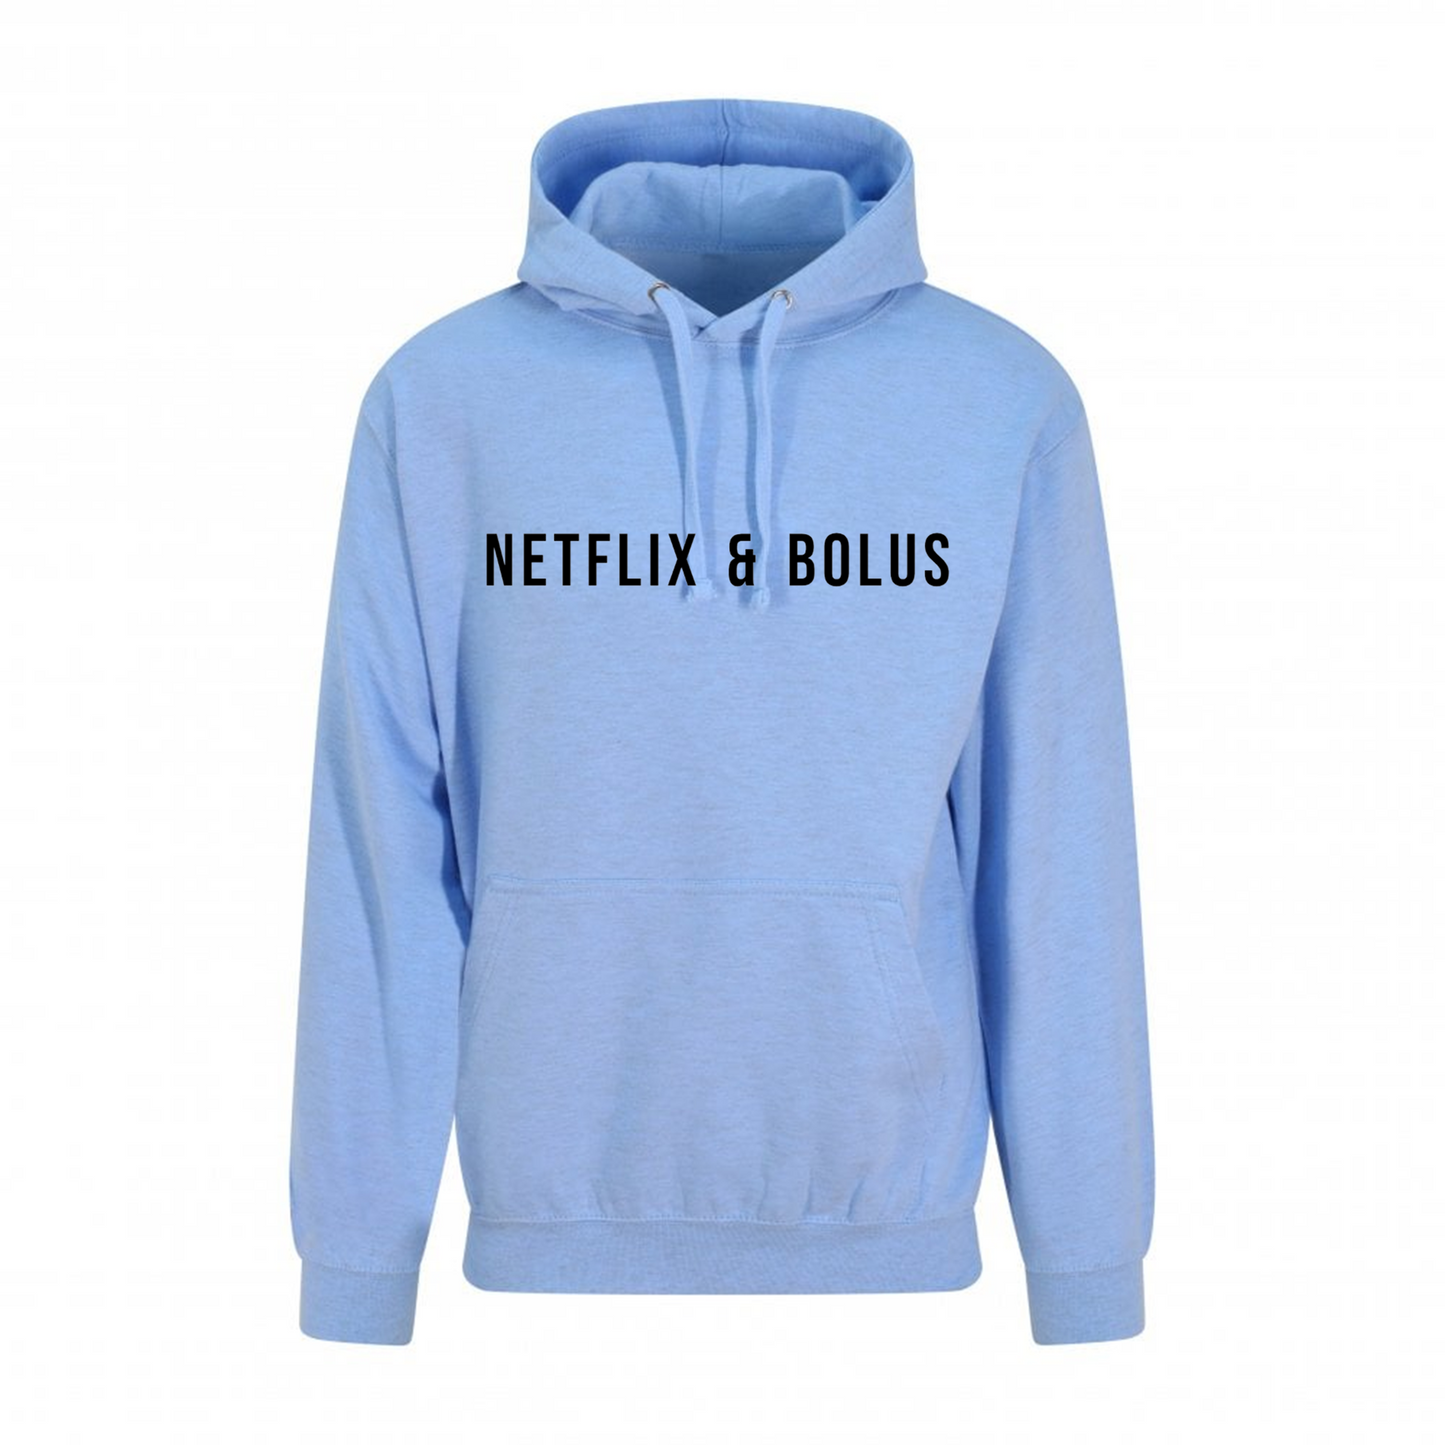 Netflix & Bolus Pastel Hoodie